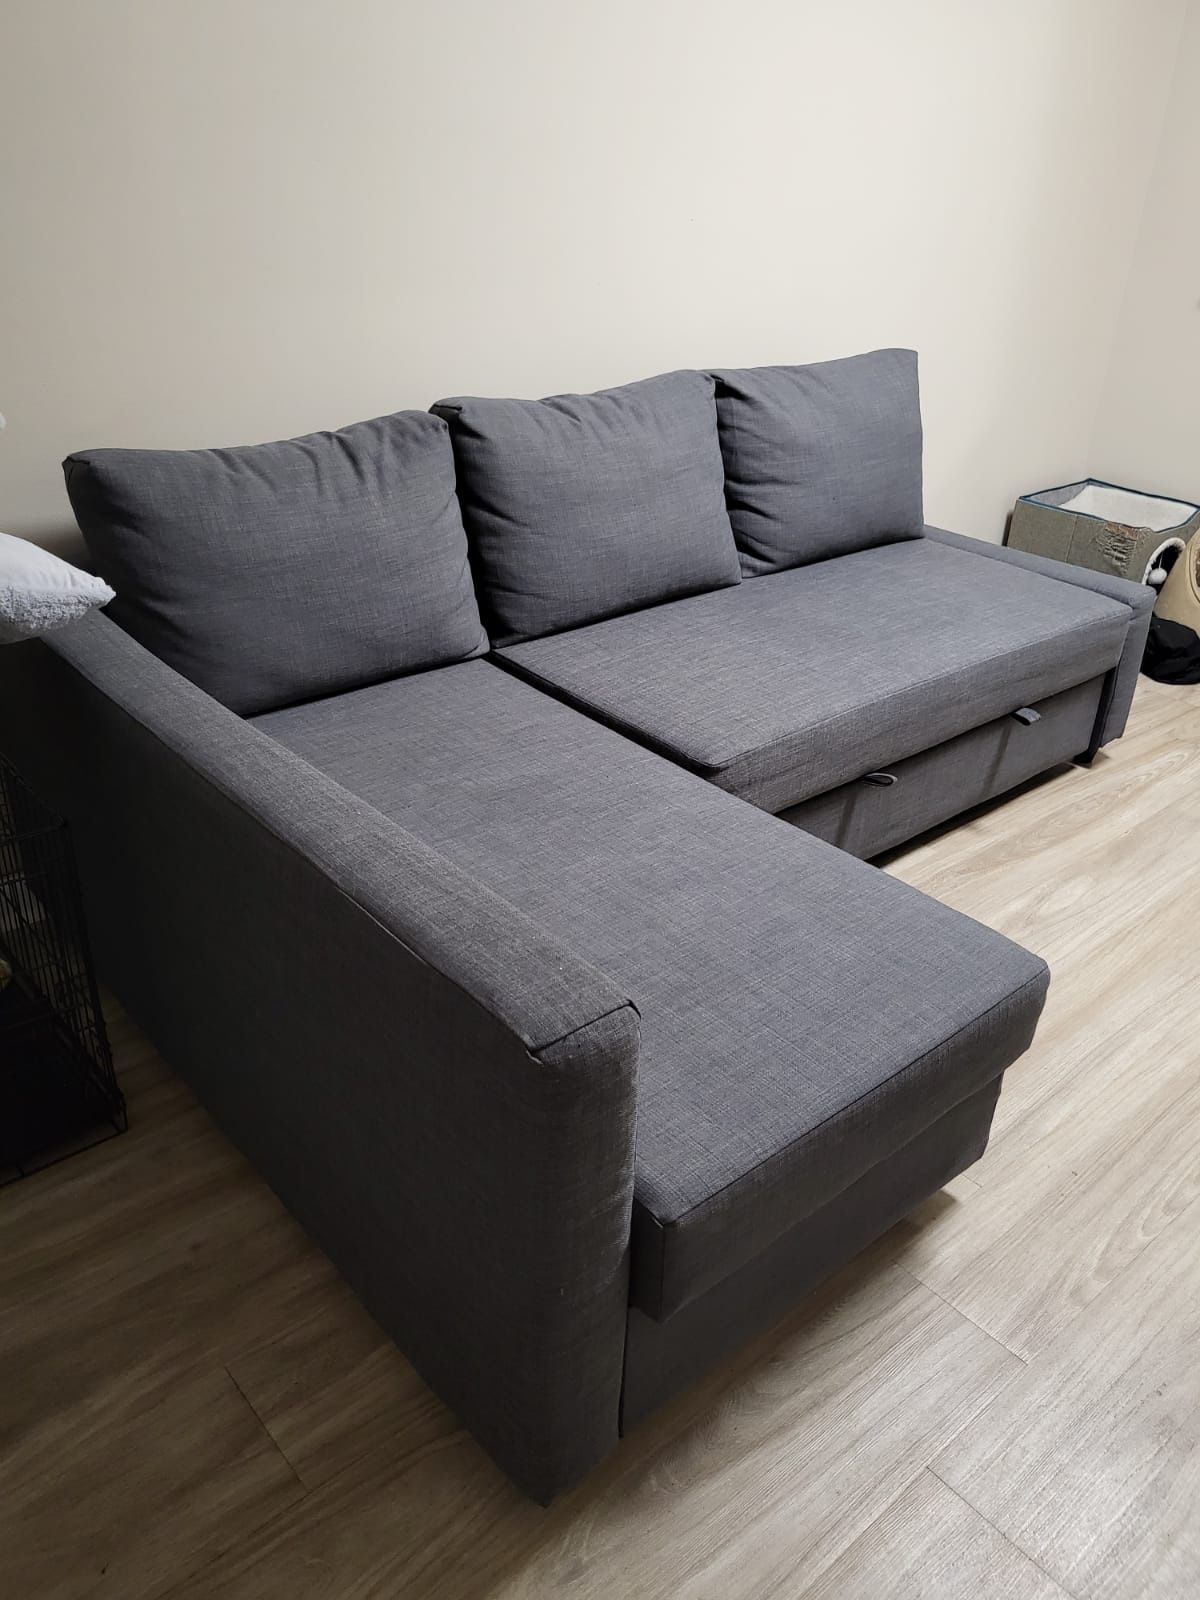 IKEA FRIHETEN Couch Sleeper/Sectional (600)